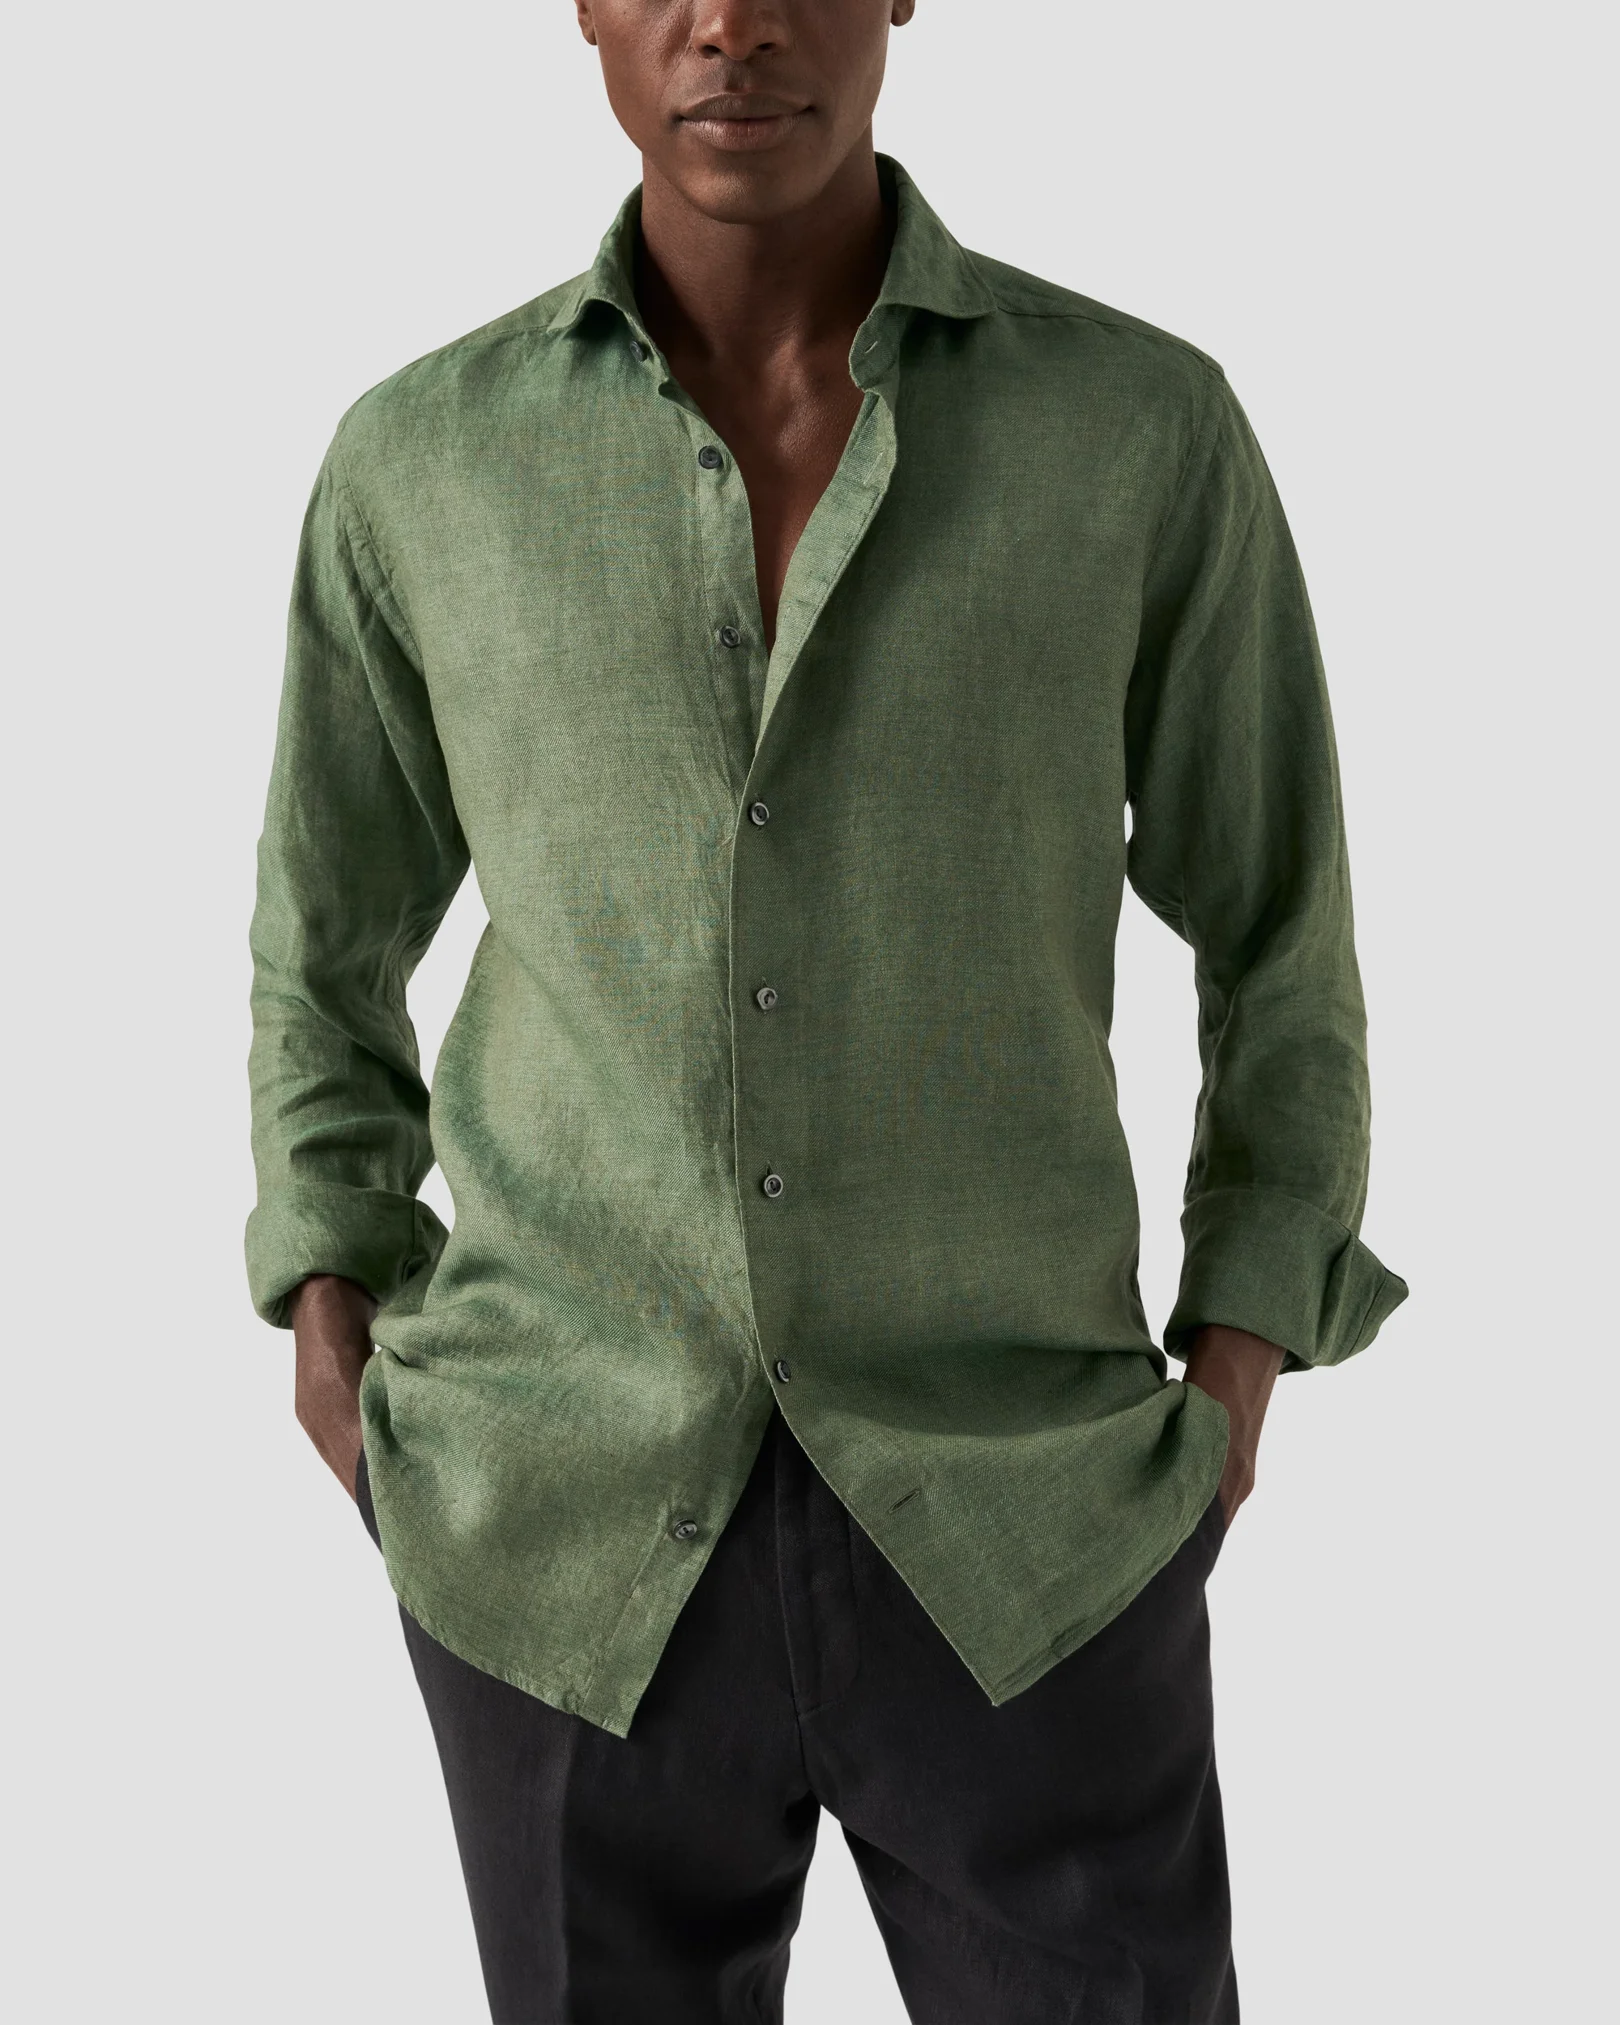 Eton - Dark Green Linen Twill Shirt